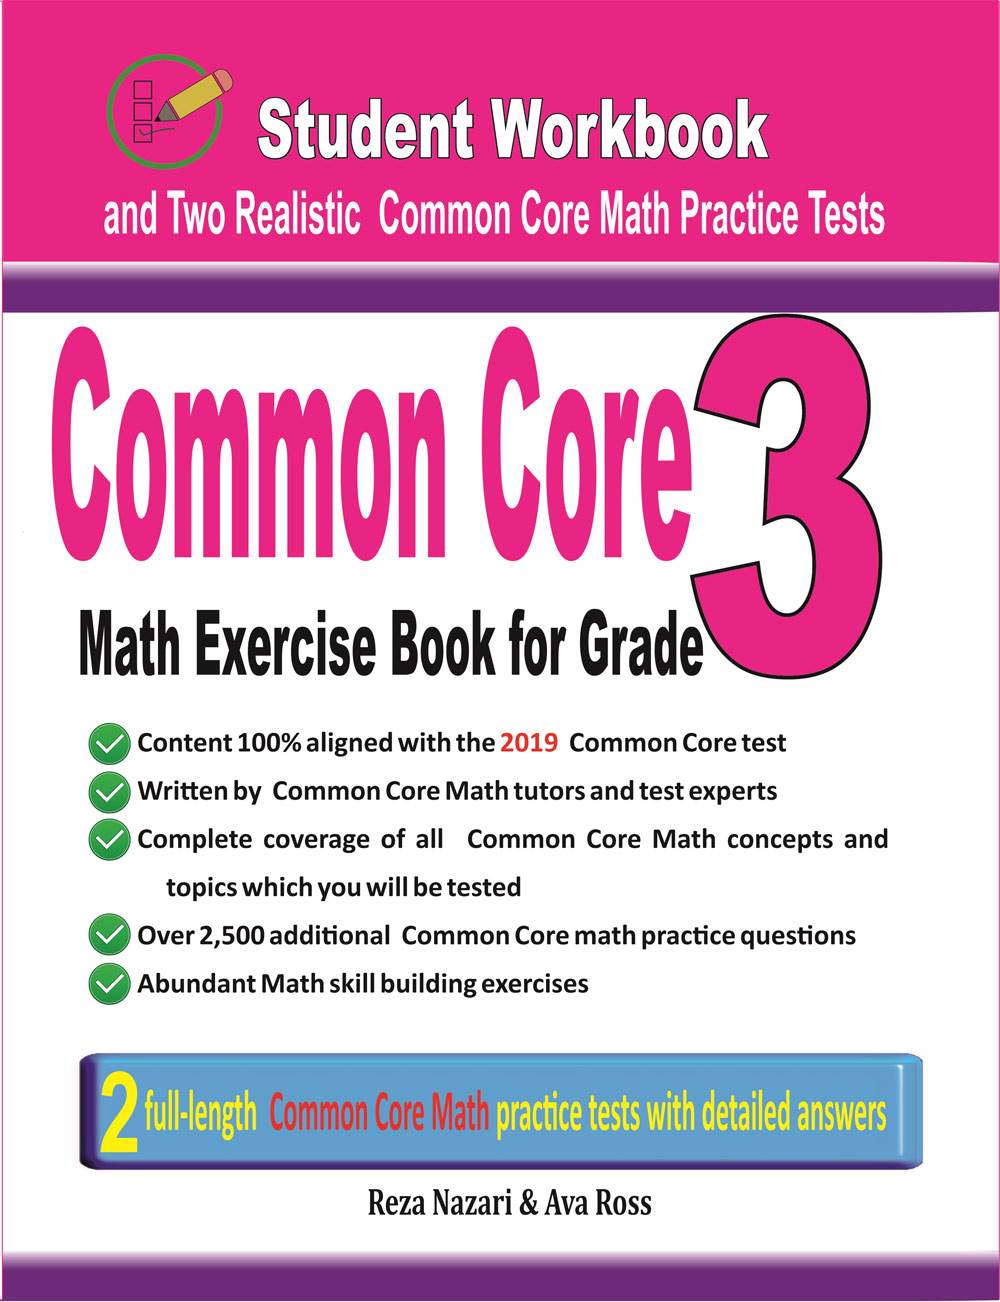 10 Most Common 3rd Grade Fsa Math Questions